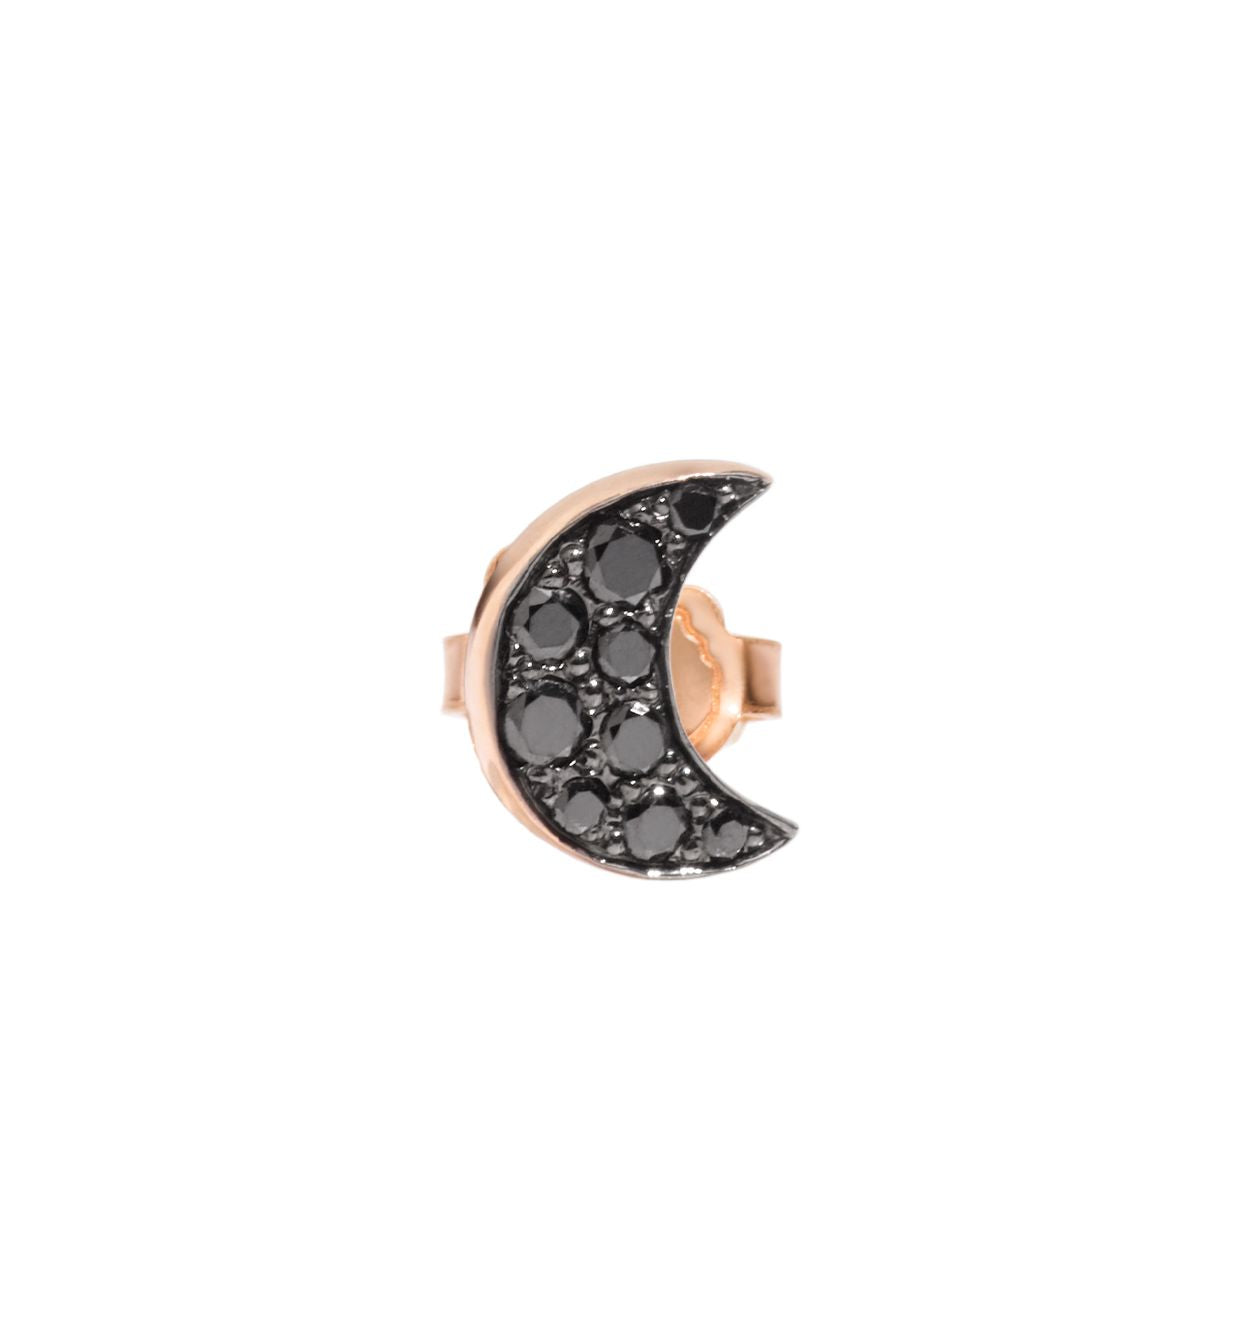 Dodo Moon Earrings in 9k Rose Gold and Black Diamonds - Orsini Jewellers NZ